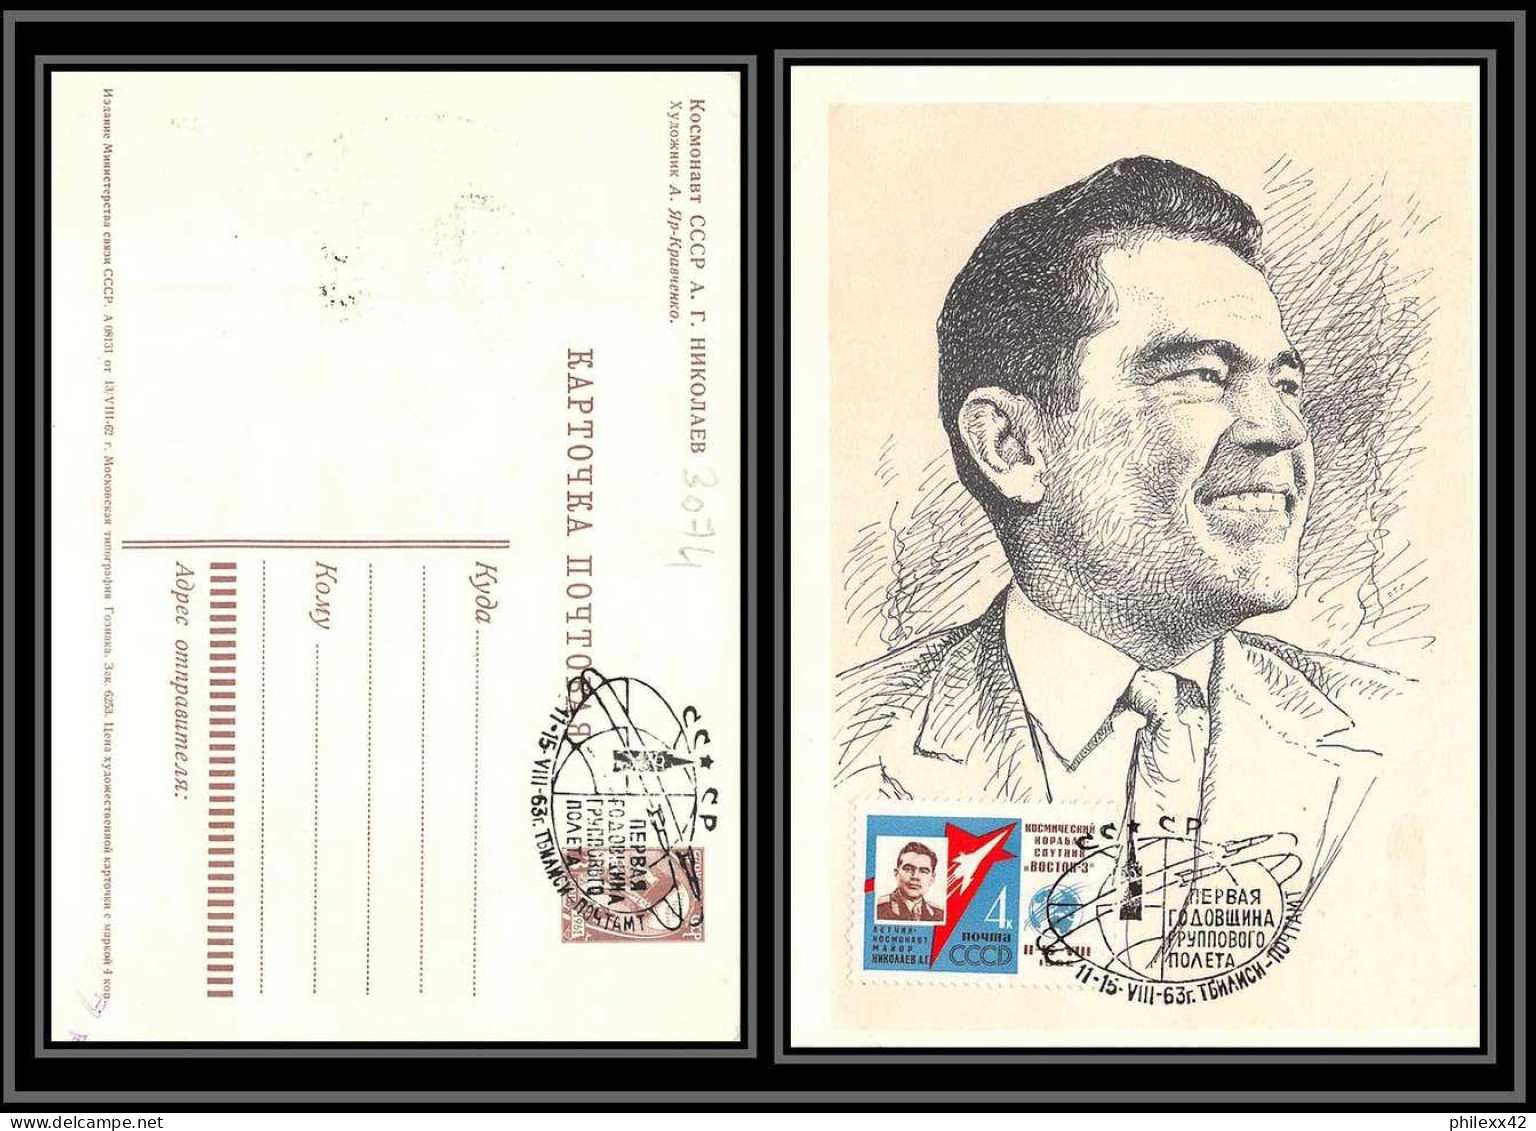 3074 Espace (space) Entier Postal (Stamped Stationery) Russie (Russia) Popovich 11/8/1962 Anniversaire Vol Bostok 4 - Russia & USSR